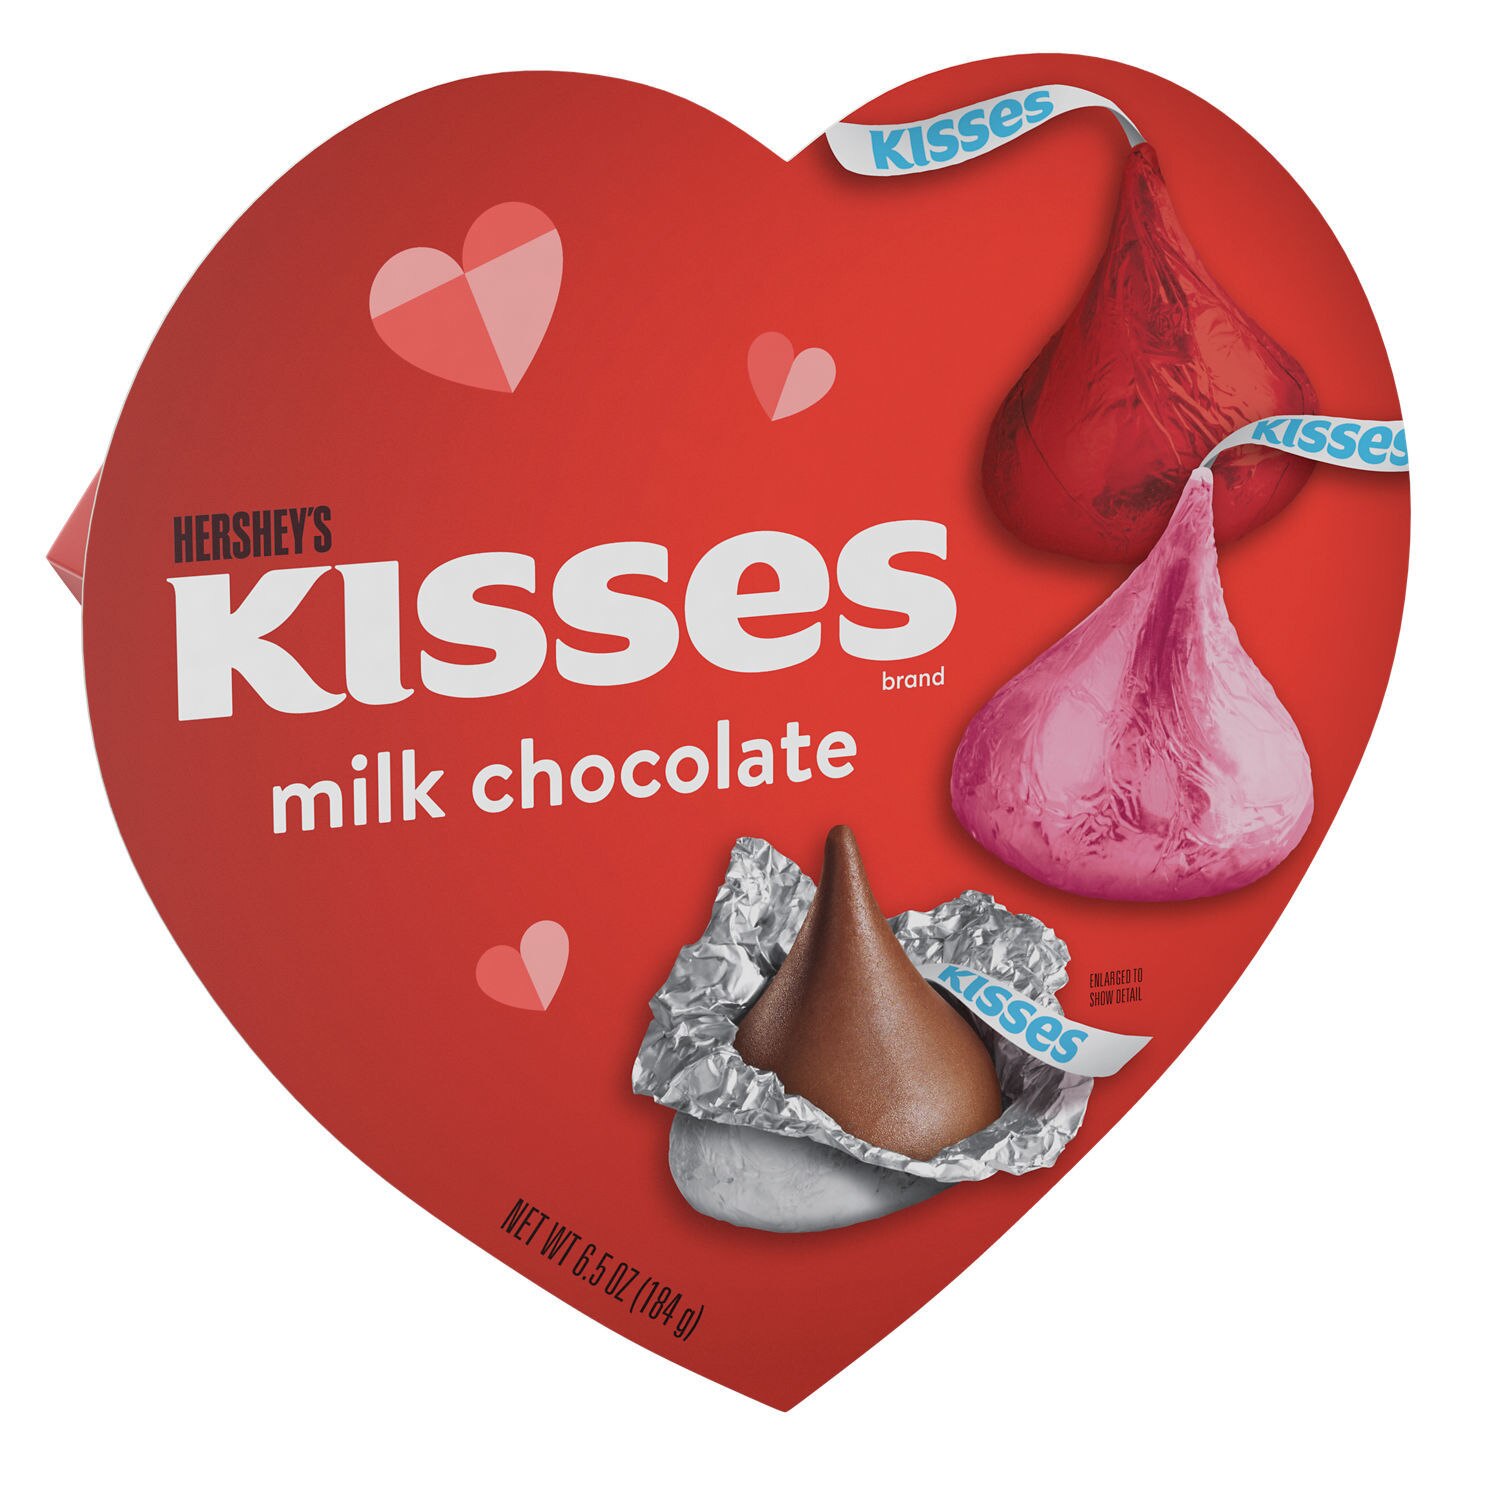 HERSHEY'S KISSES Milk Chocolate Candy, Valentine's Day, 6.5 oz, Gift Box